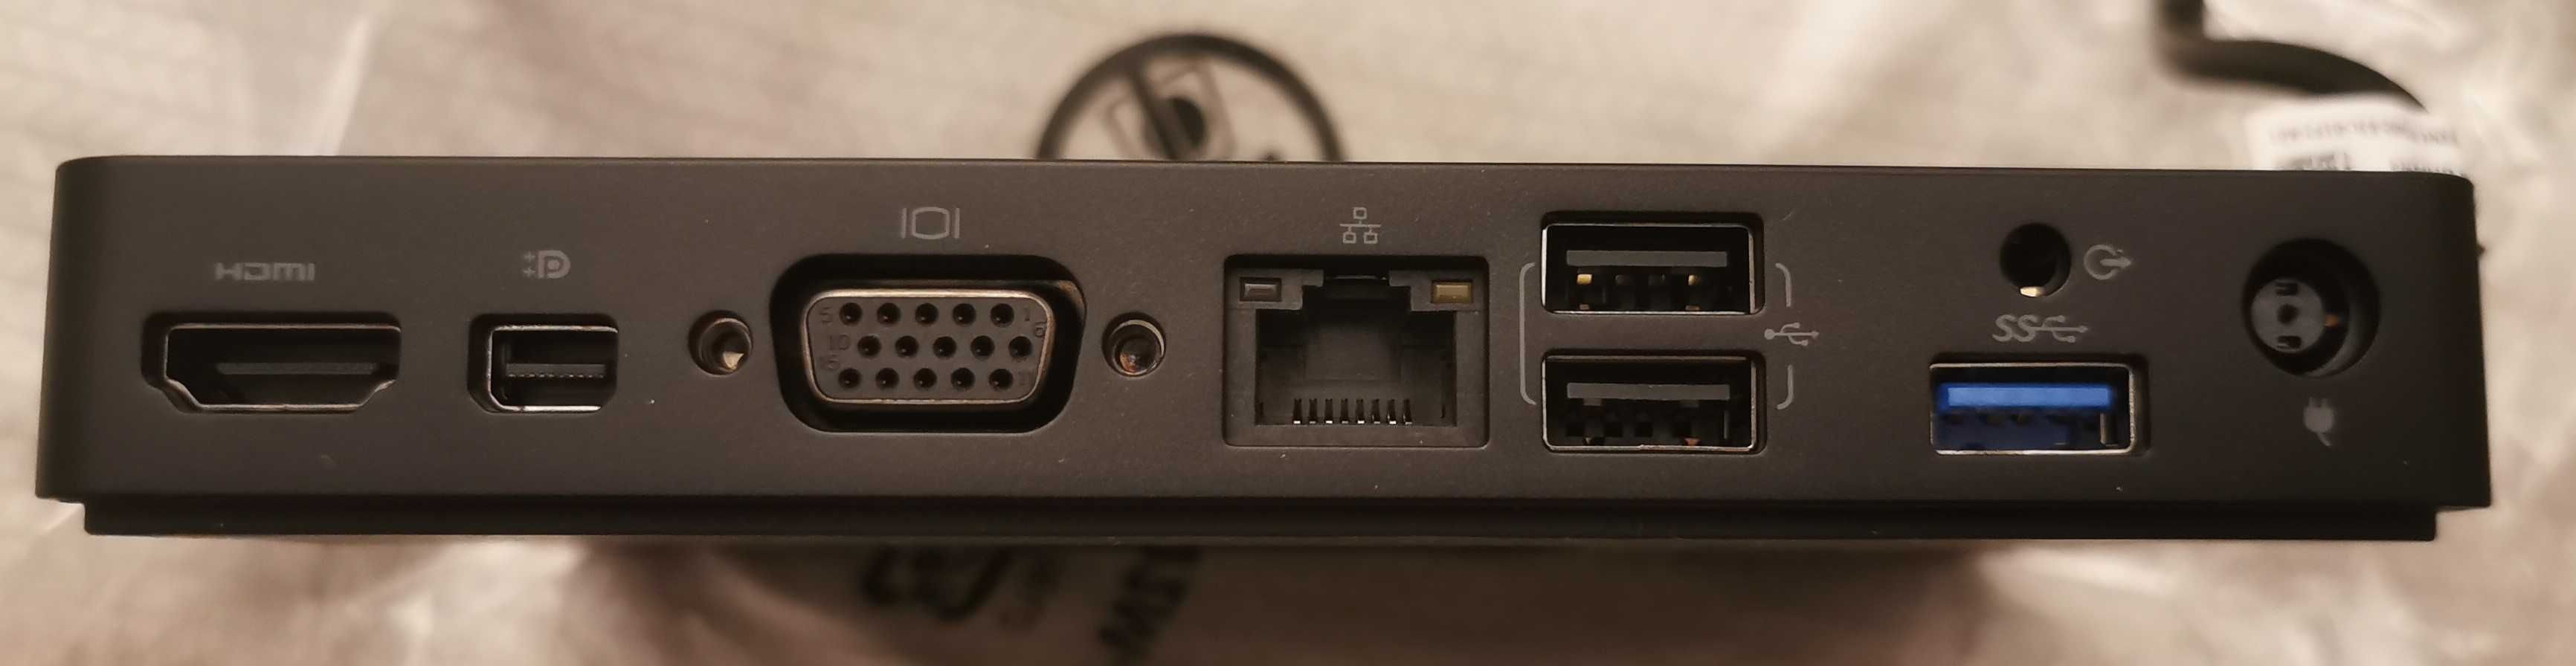 Dell USB-C Business Dock WD15 180W адаптер докинг станция